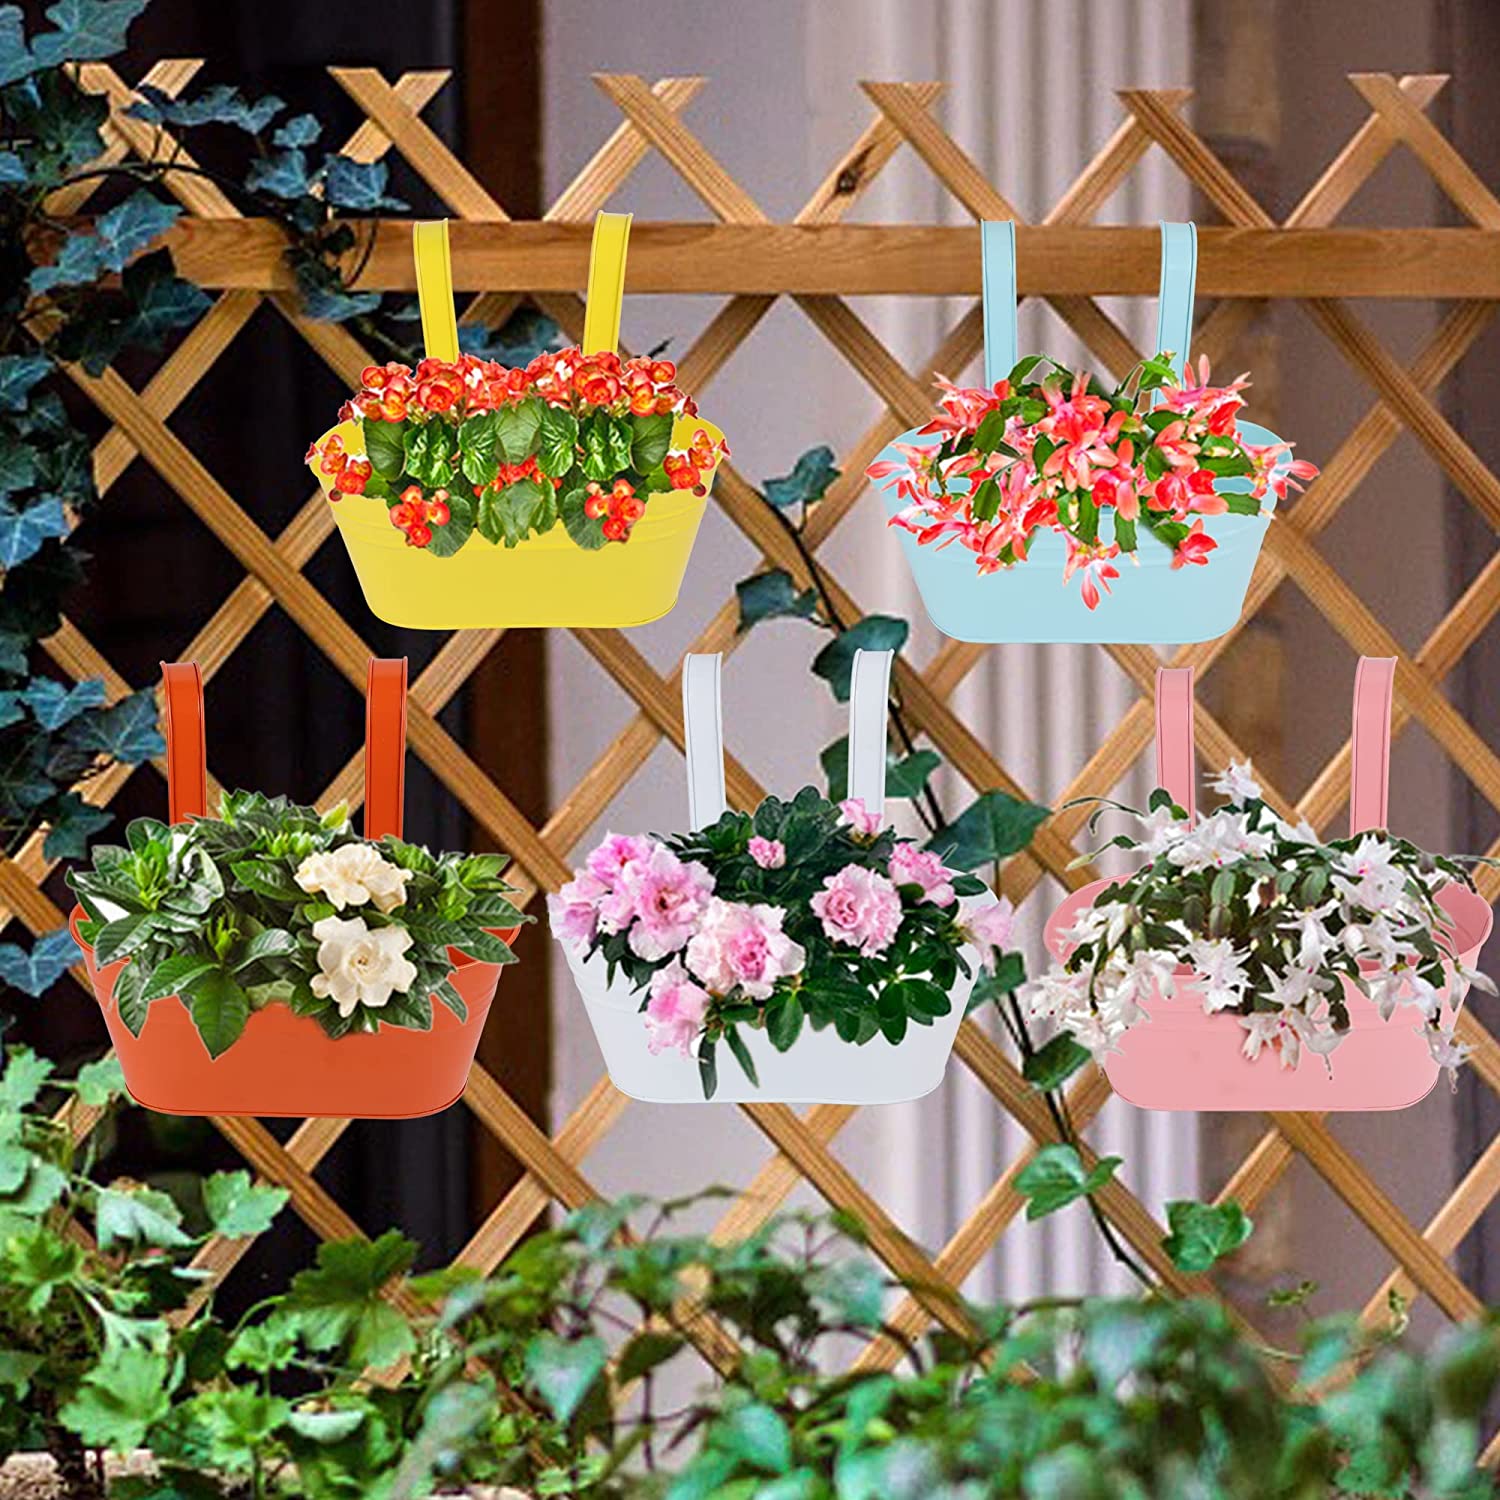 Glory Island 5 Pcs Hanging Flower Pot, Metal Iron Bucket Planter Box with Detachable Hooks, Outdoor Flowers Holder for Railing Fence Balcony Garden Yard